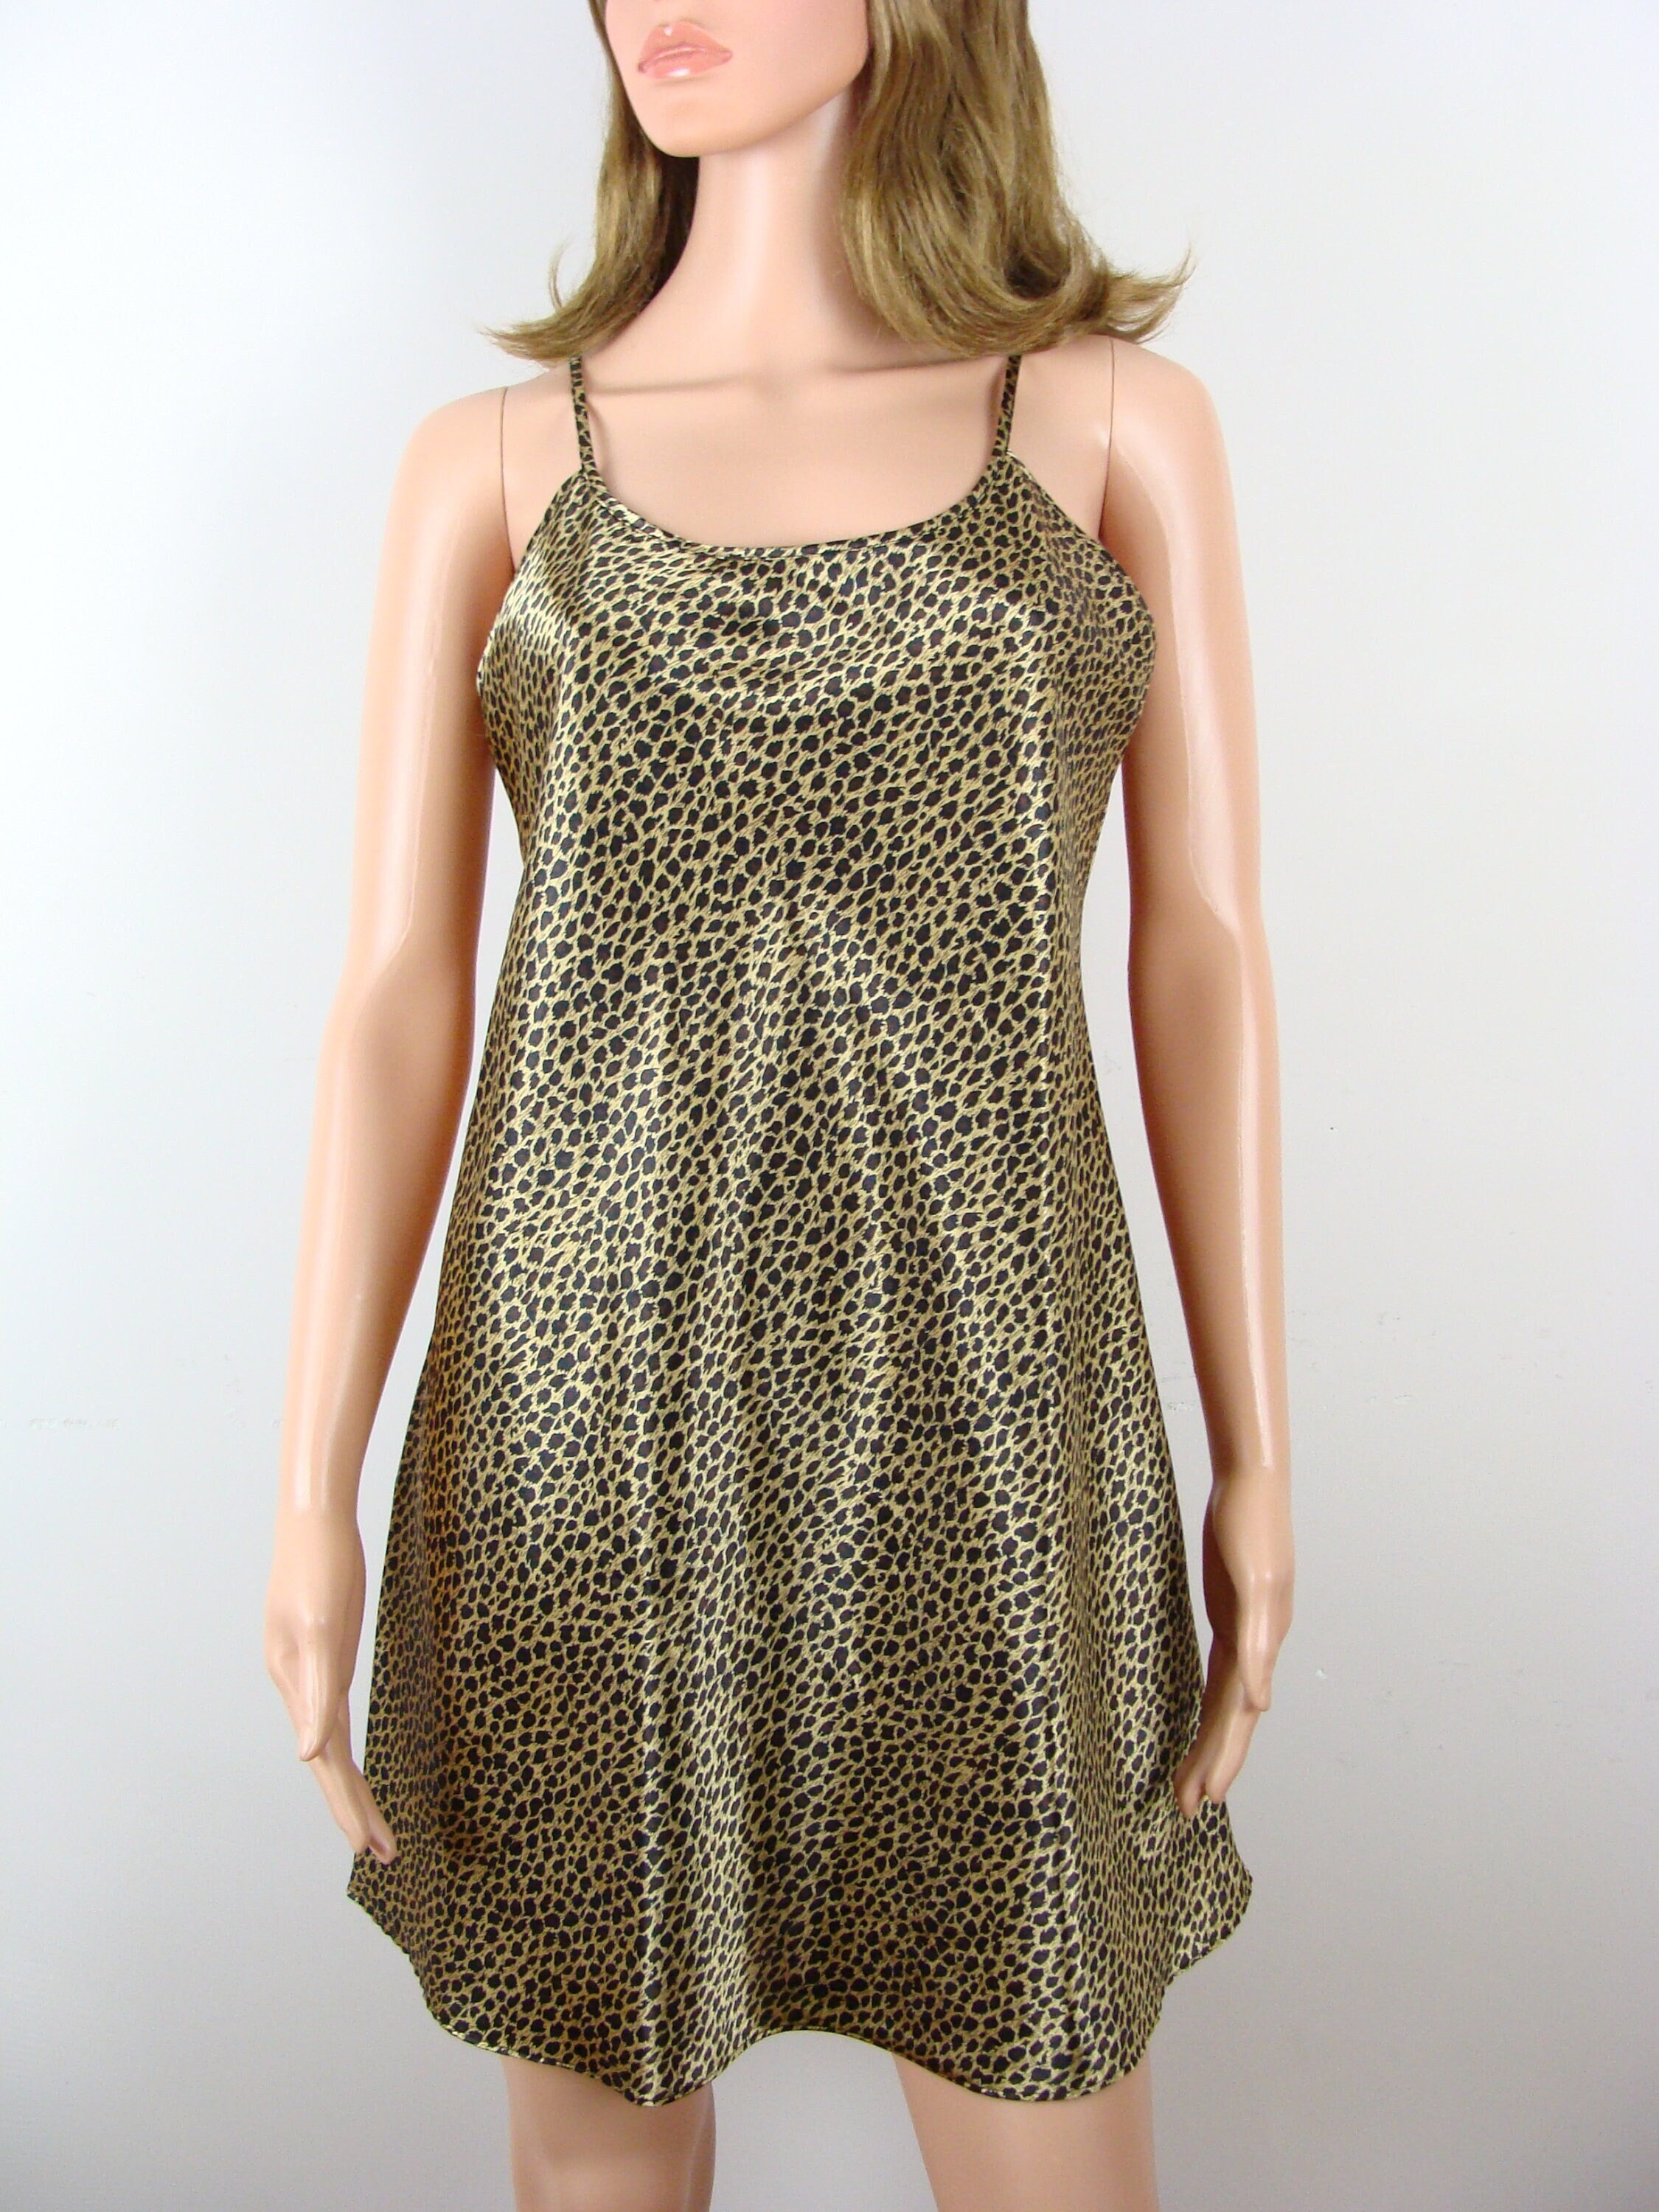 Leopard Slip Dress 